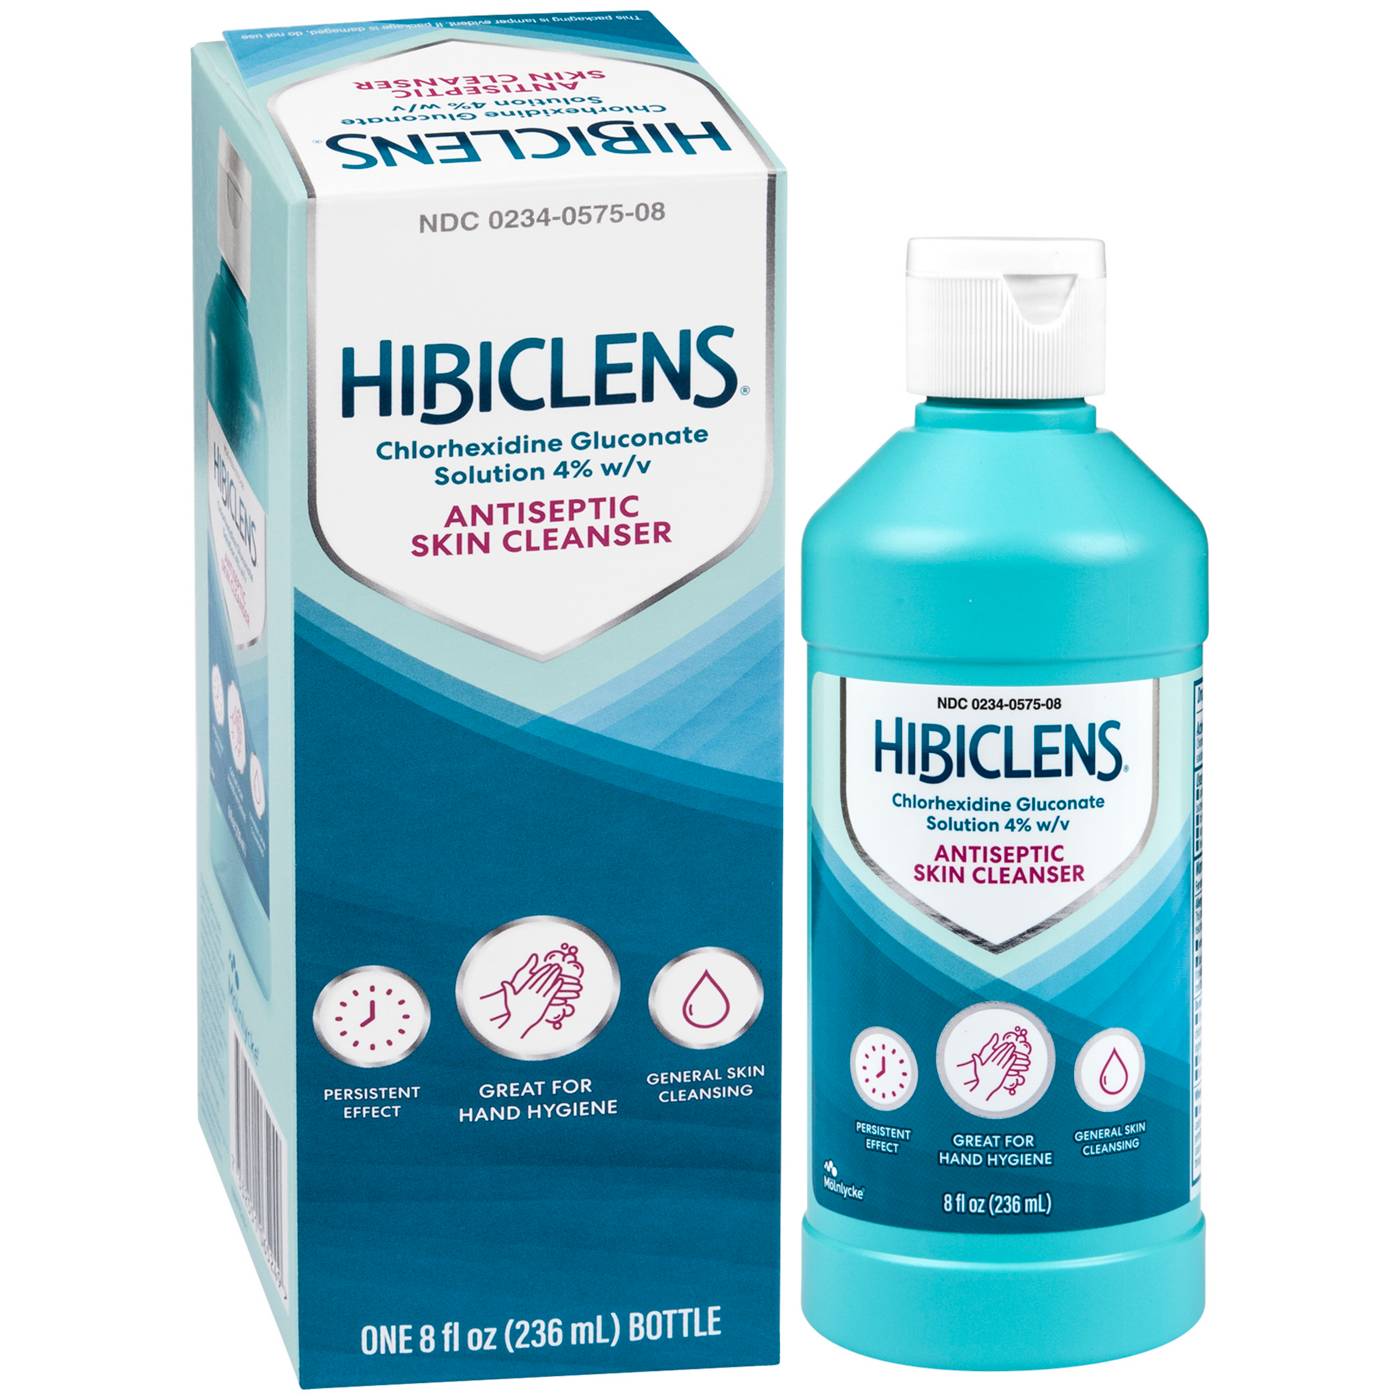 Hibiclens Antiseptic Skin Cleanser; image 3 of 5